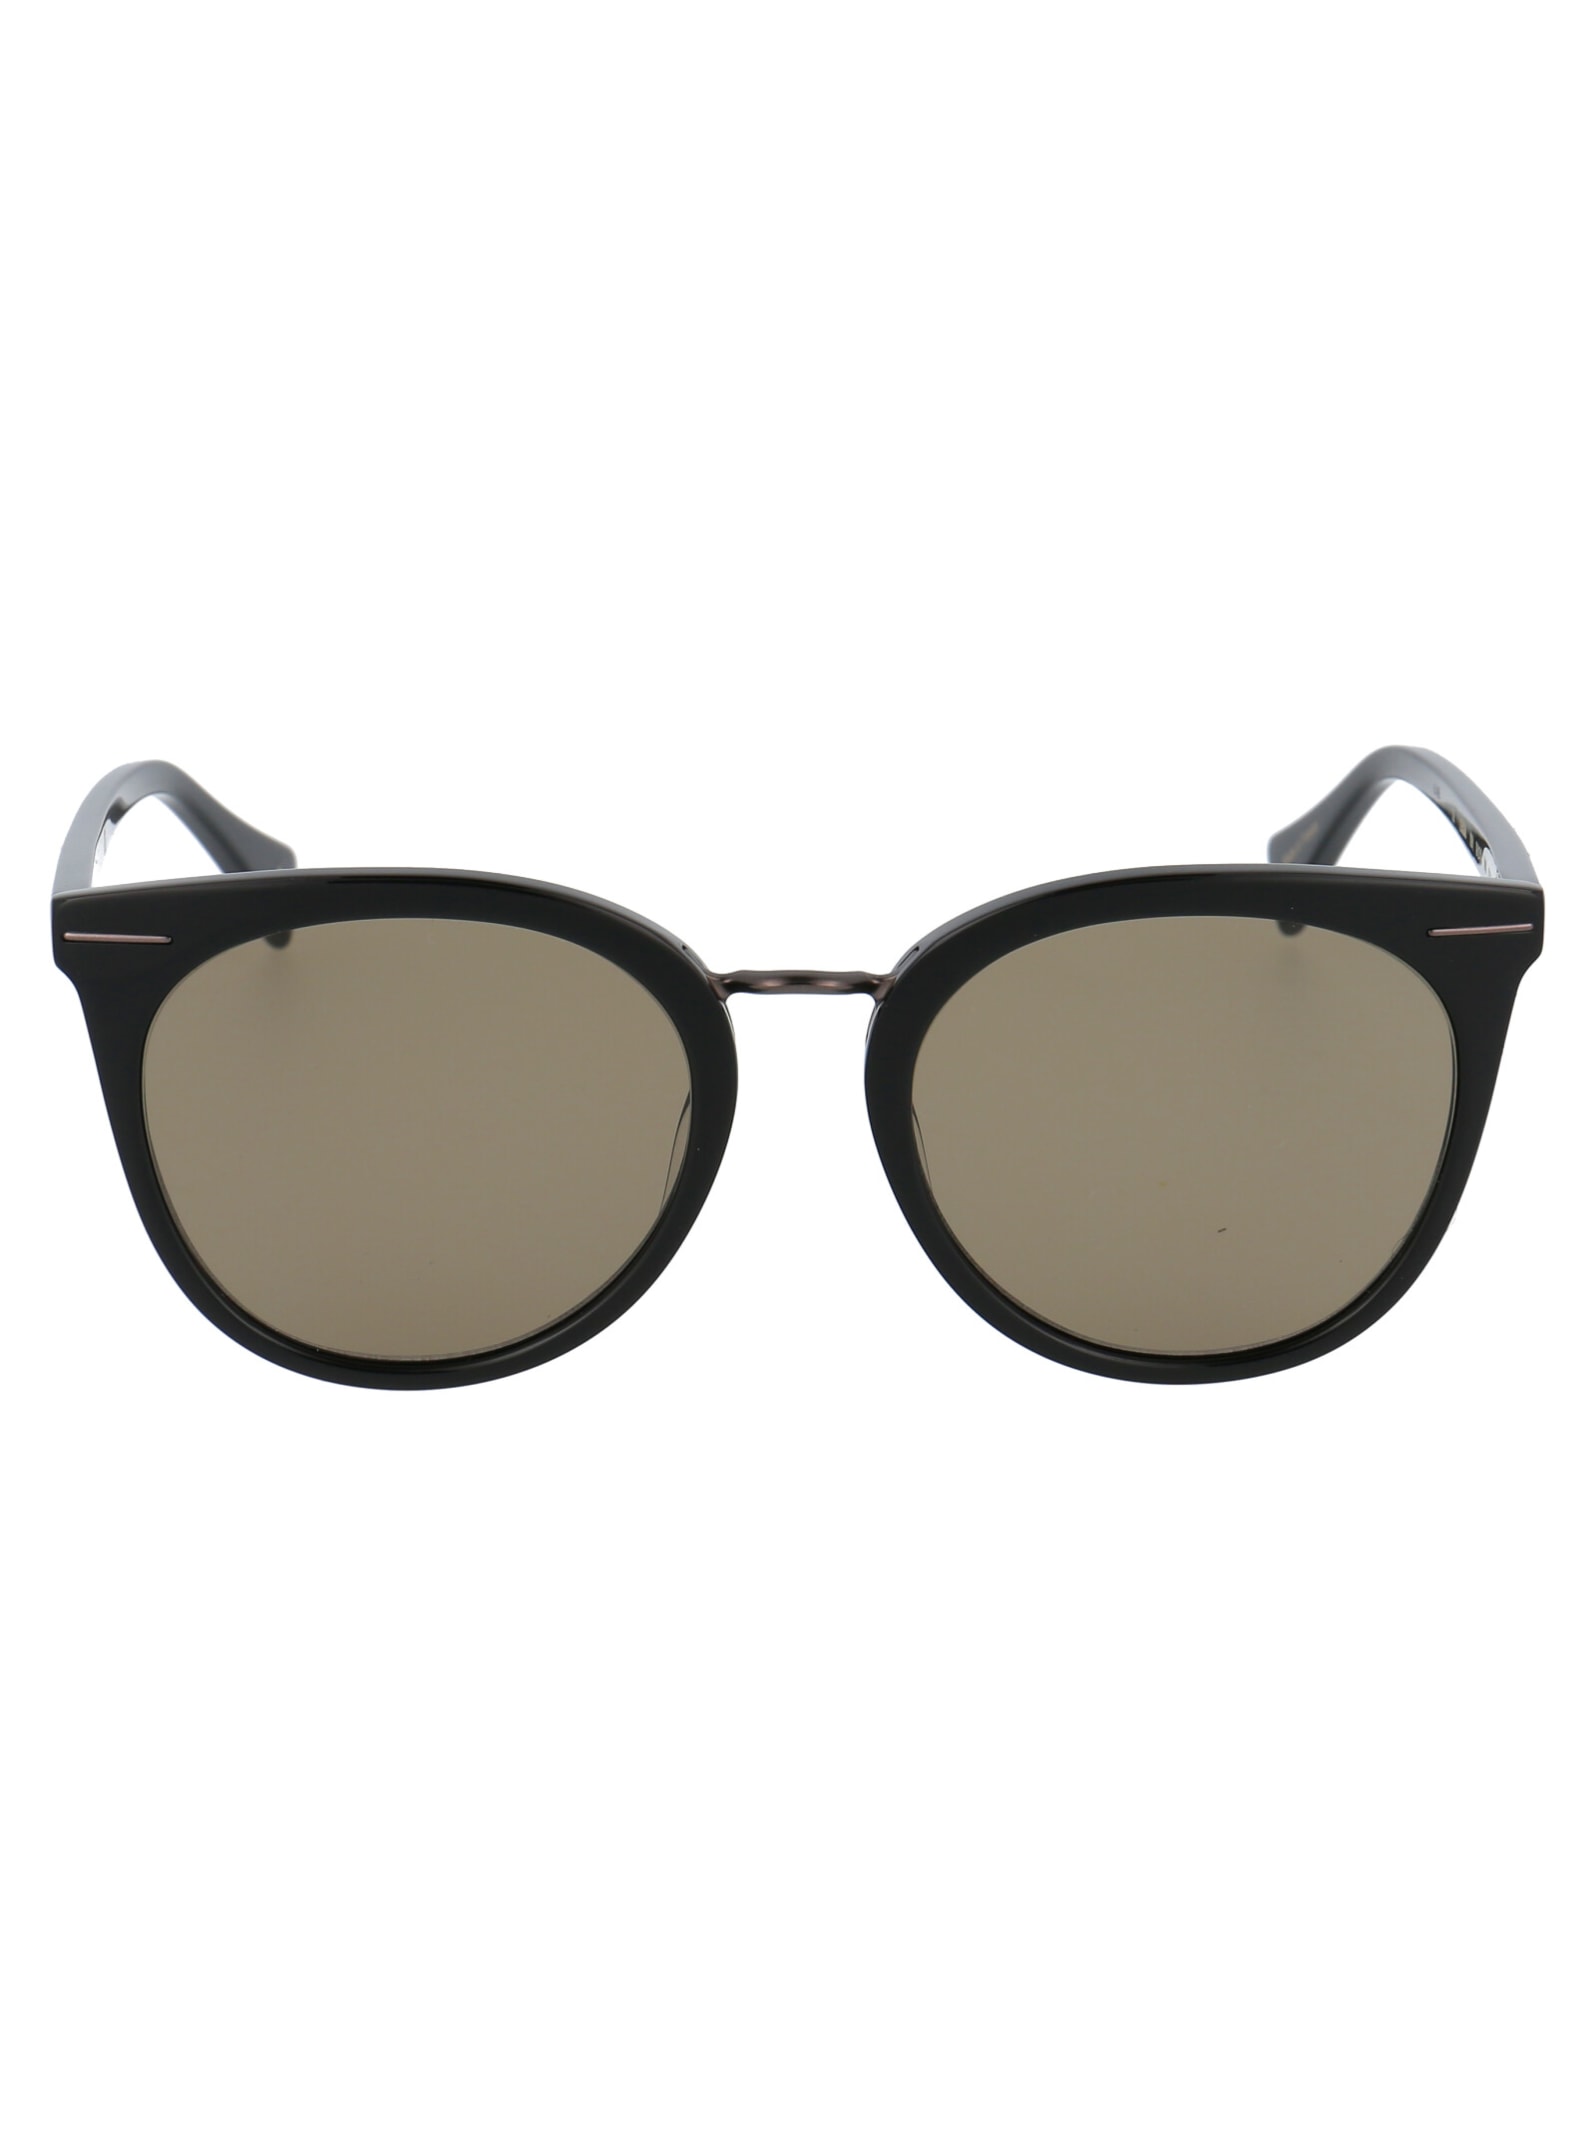 Yohji Yamamoto Ys5006 Sunglasses